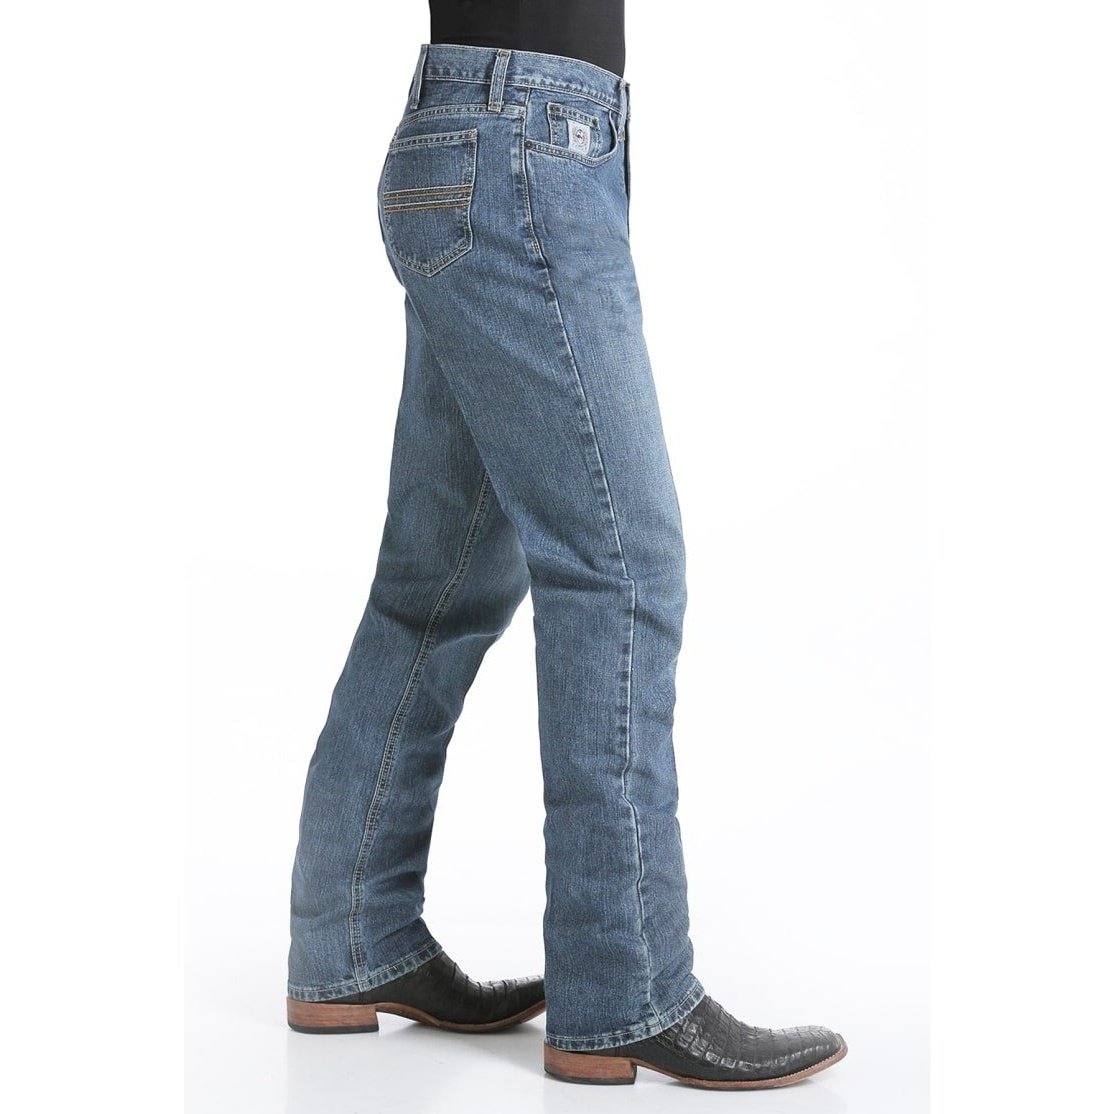 Cinch Men’s Jeans Silver Label Slim Mid Rise Straight Leg MB98034001 - Cinch